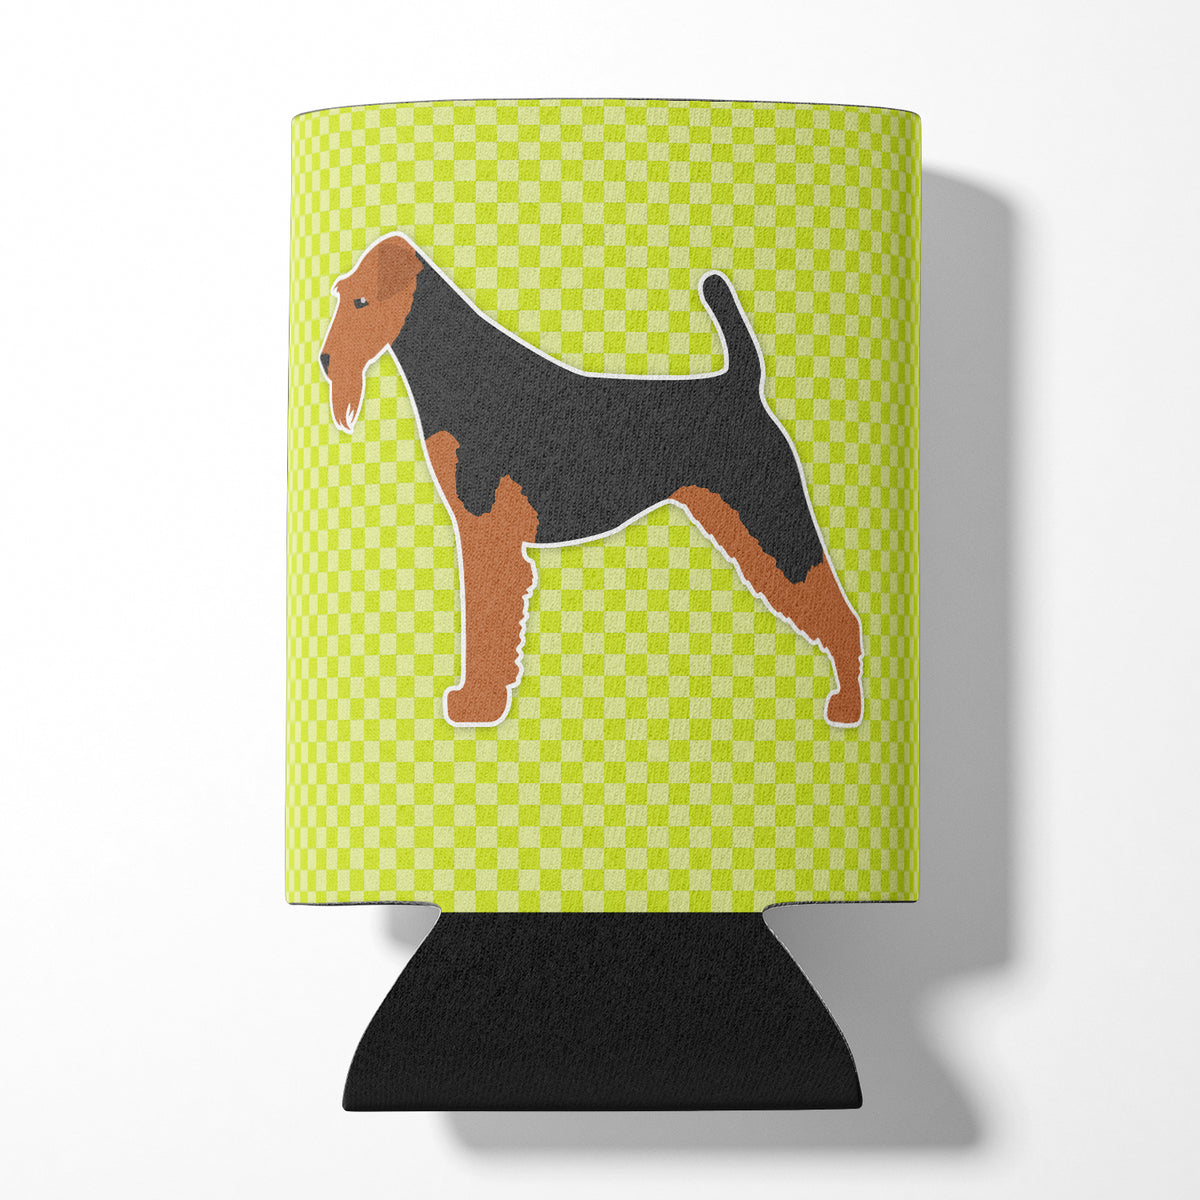 Welsh Terrier Checkerboard Green Can or Bottle Hugger BB3785CC